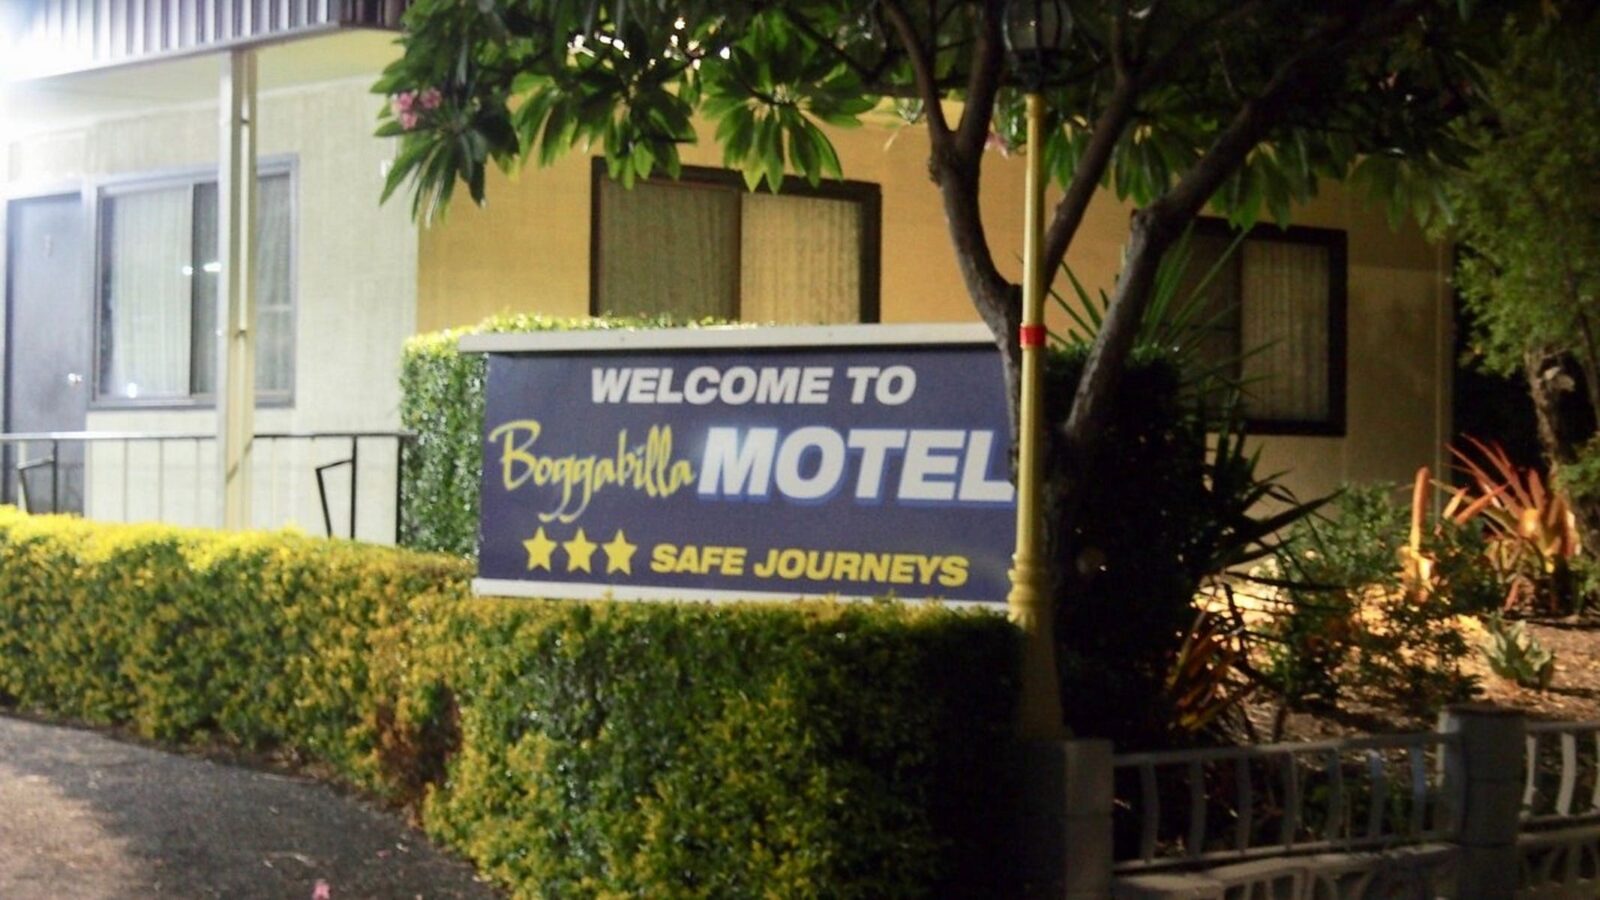 Boggabilla Motel